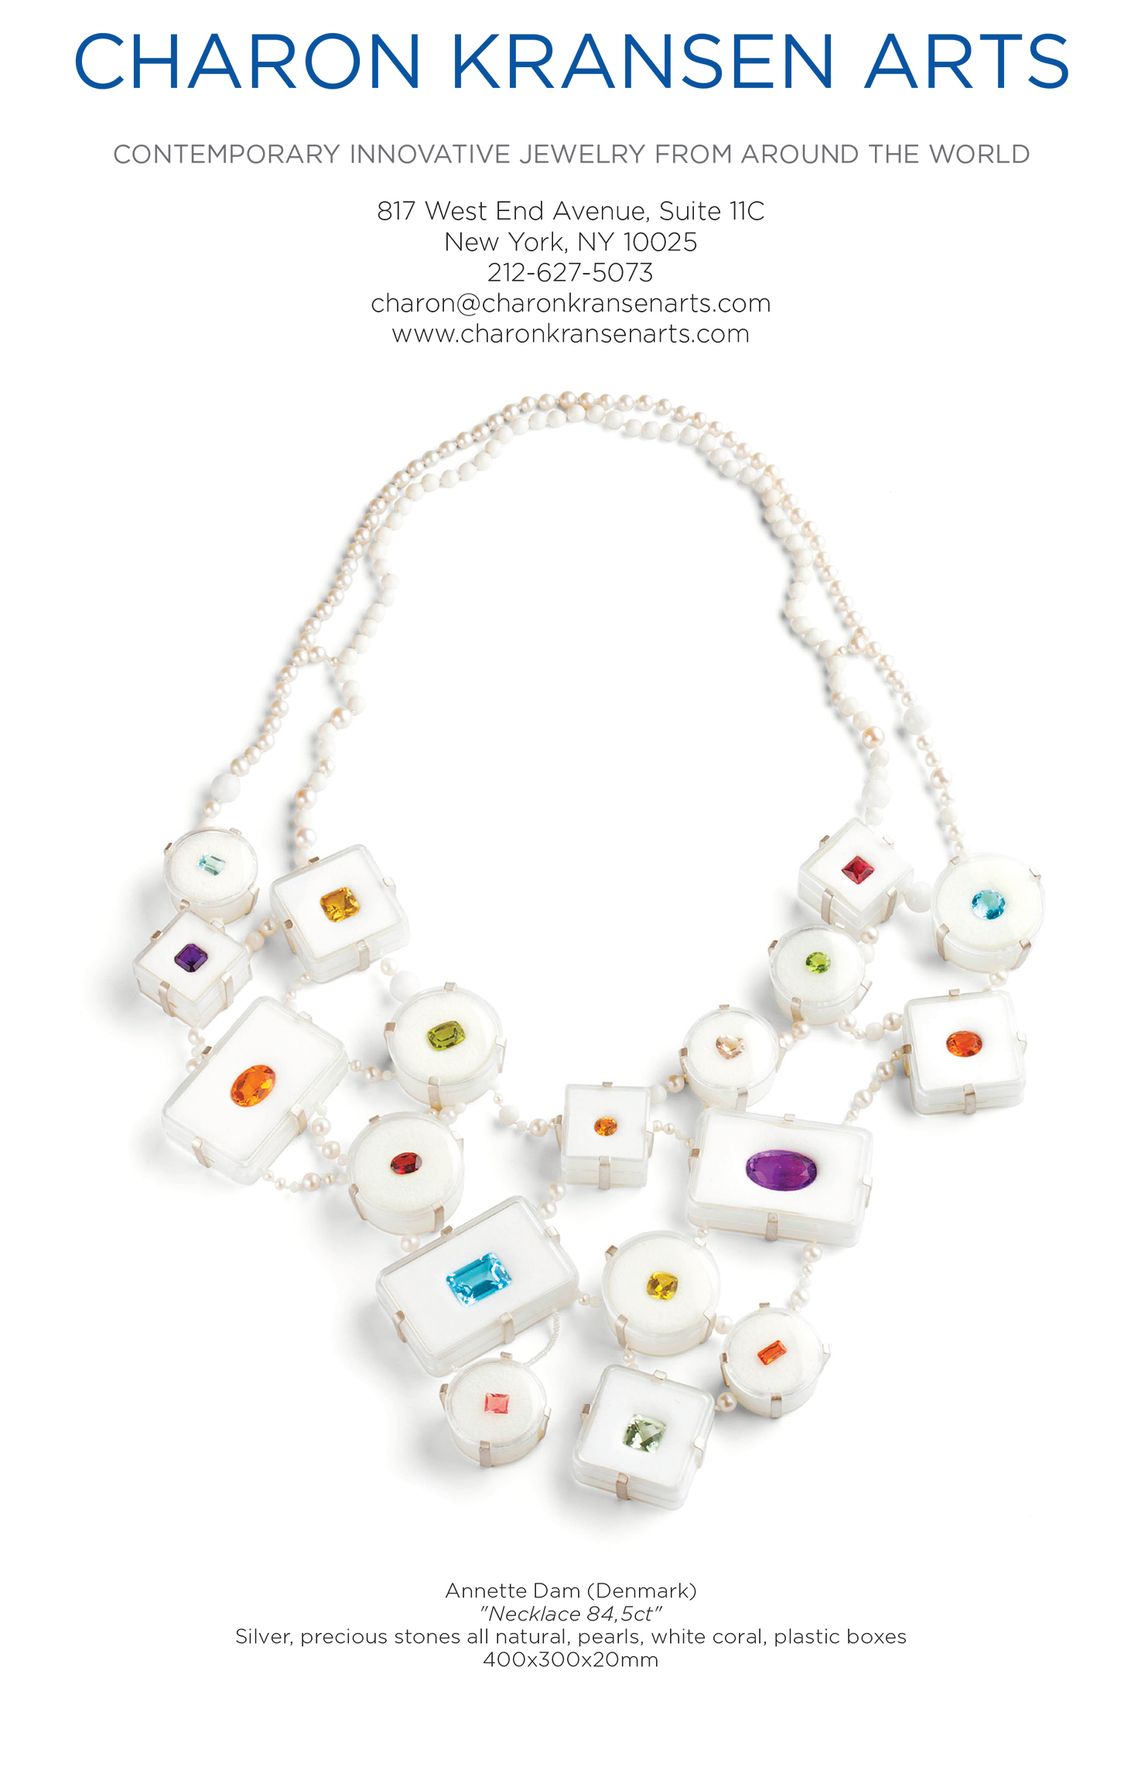 Annette Dam - Charon Kransen Arts - Contemporary Innovative Jewelry From Around the World